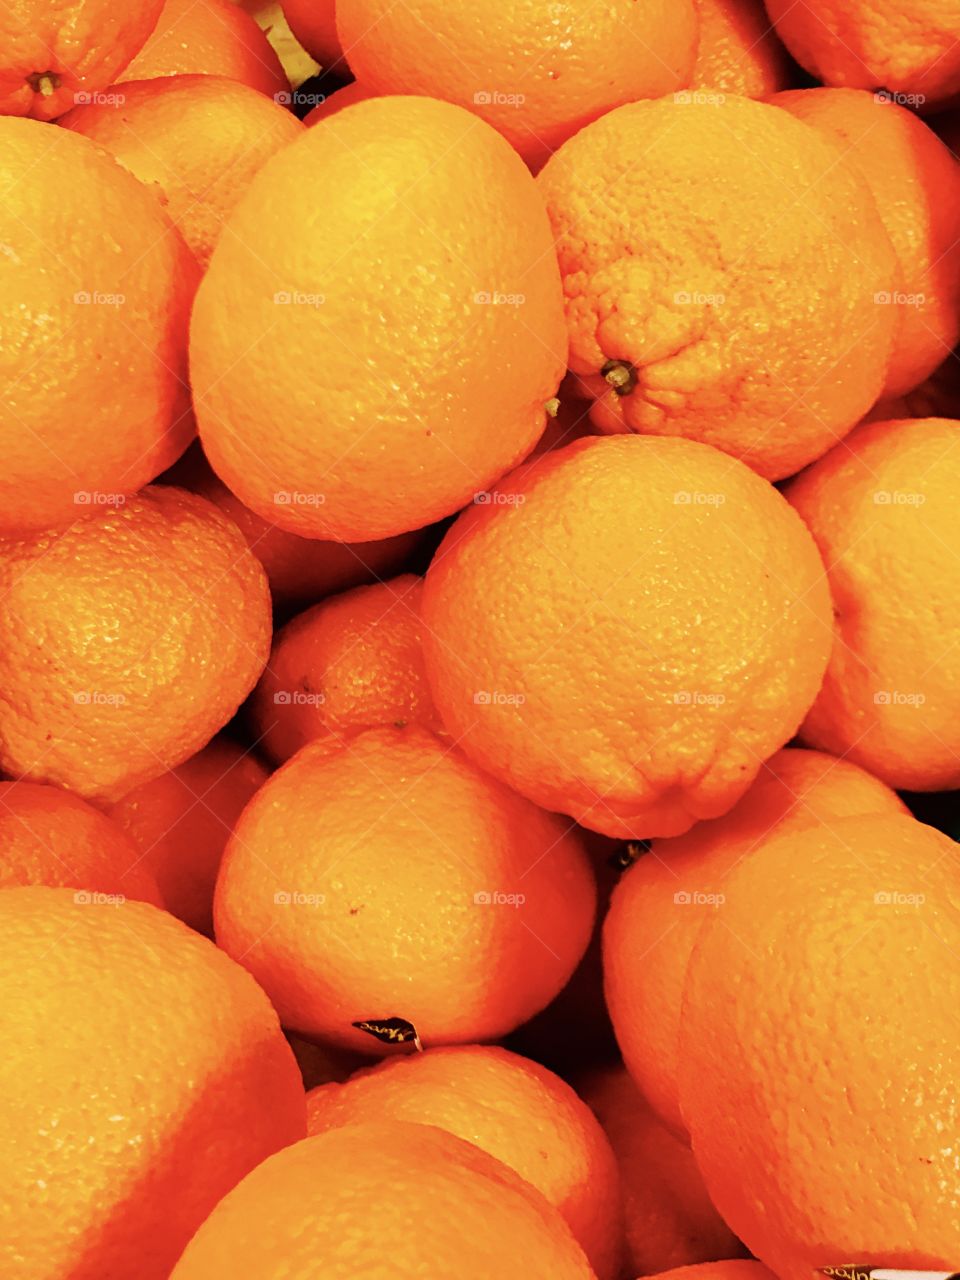 #fruit #oranges #healthy #vitamin #eat 